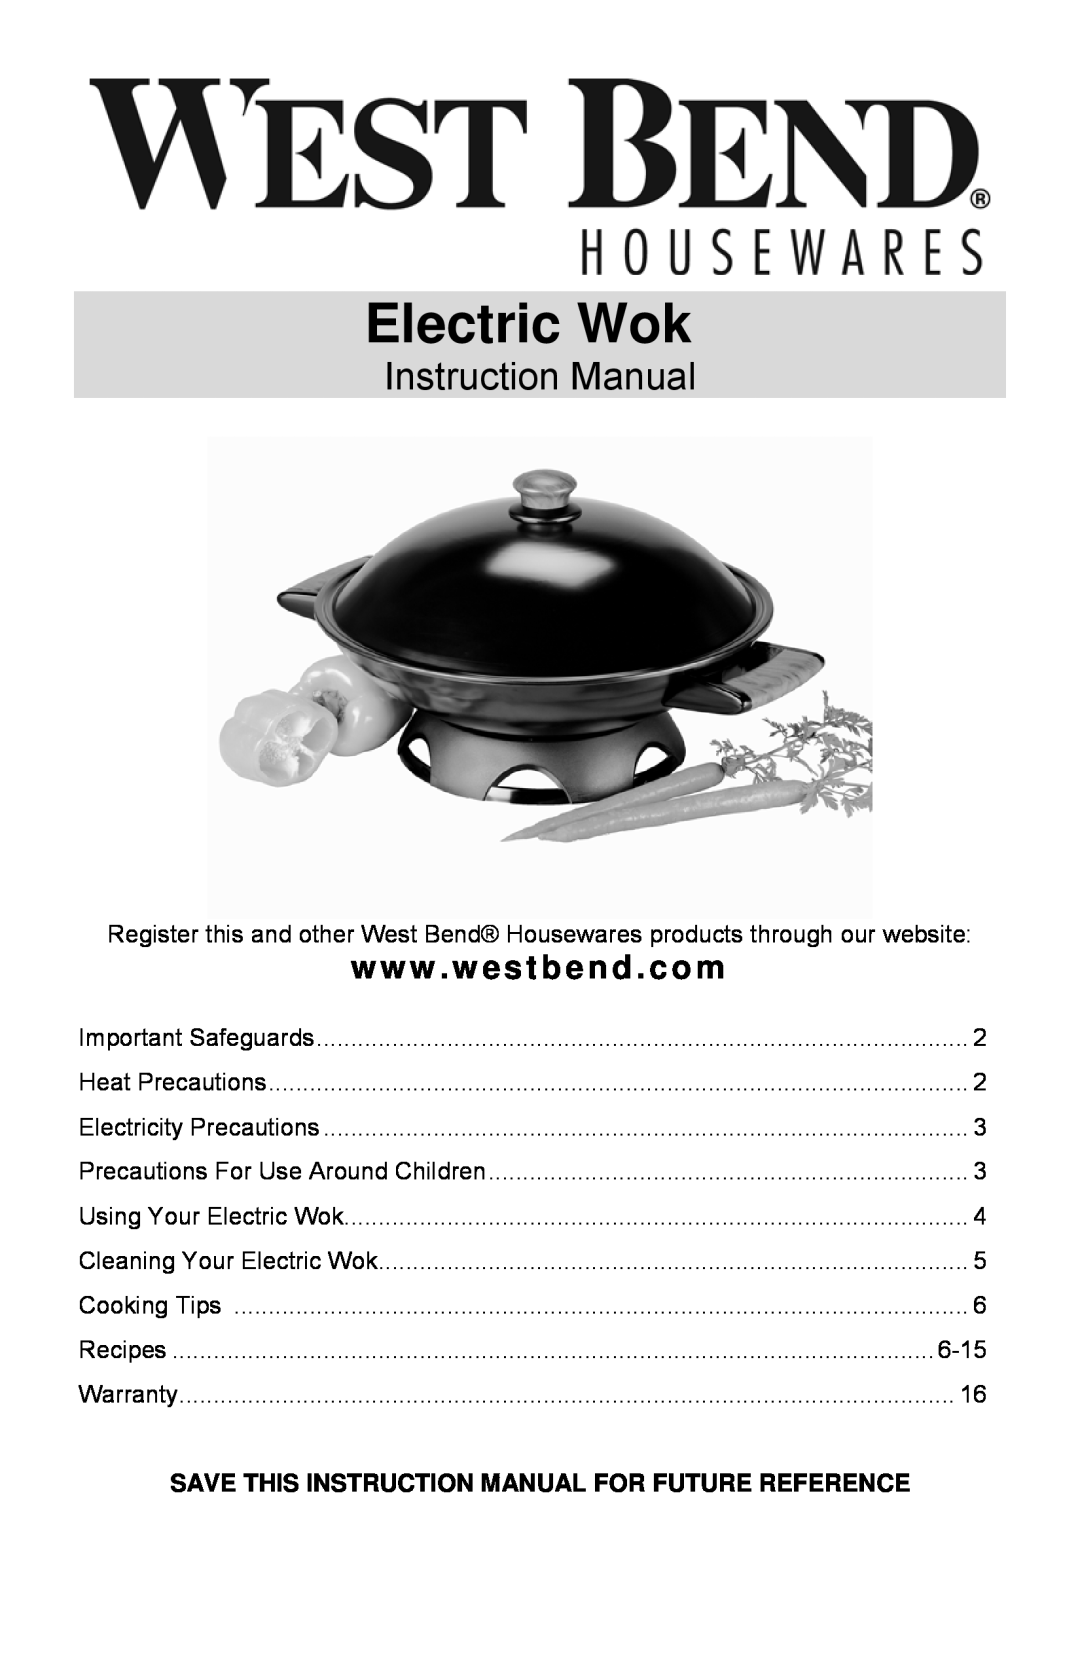 West Bend Housewares Electric Wok instruction manual Instruction Manual, www . westbend . com 